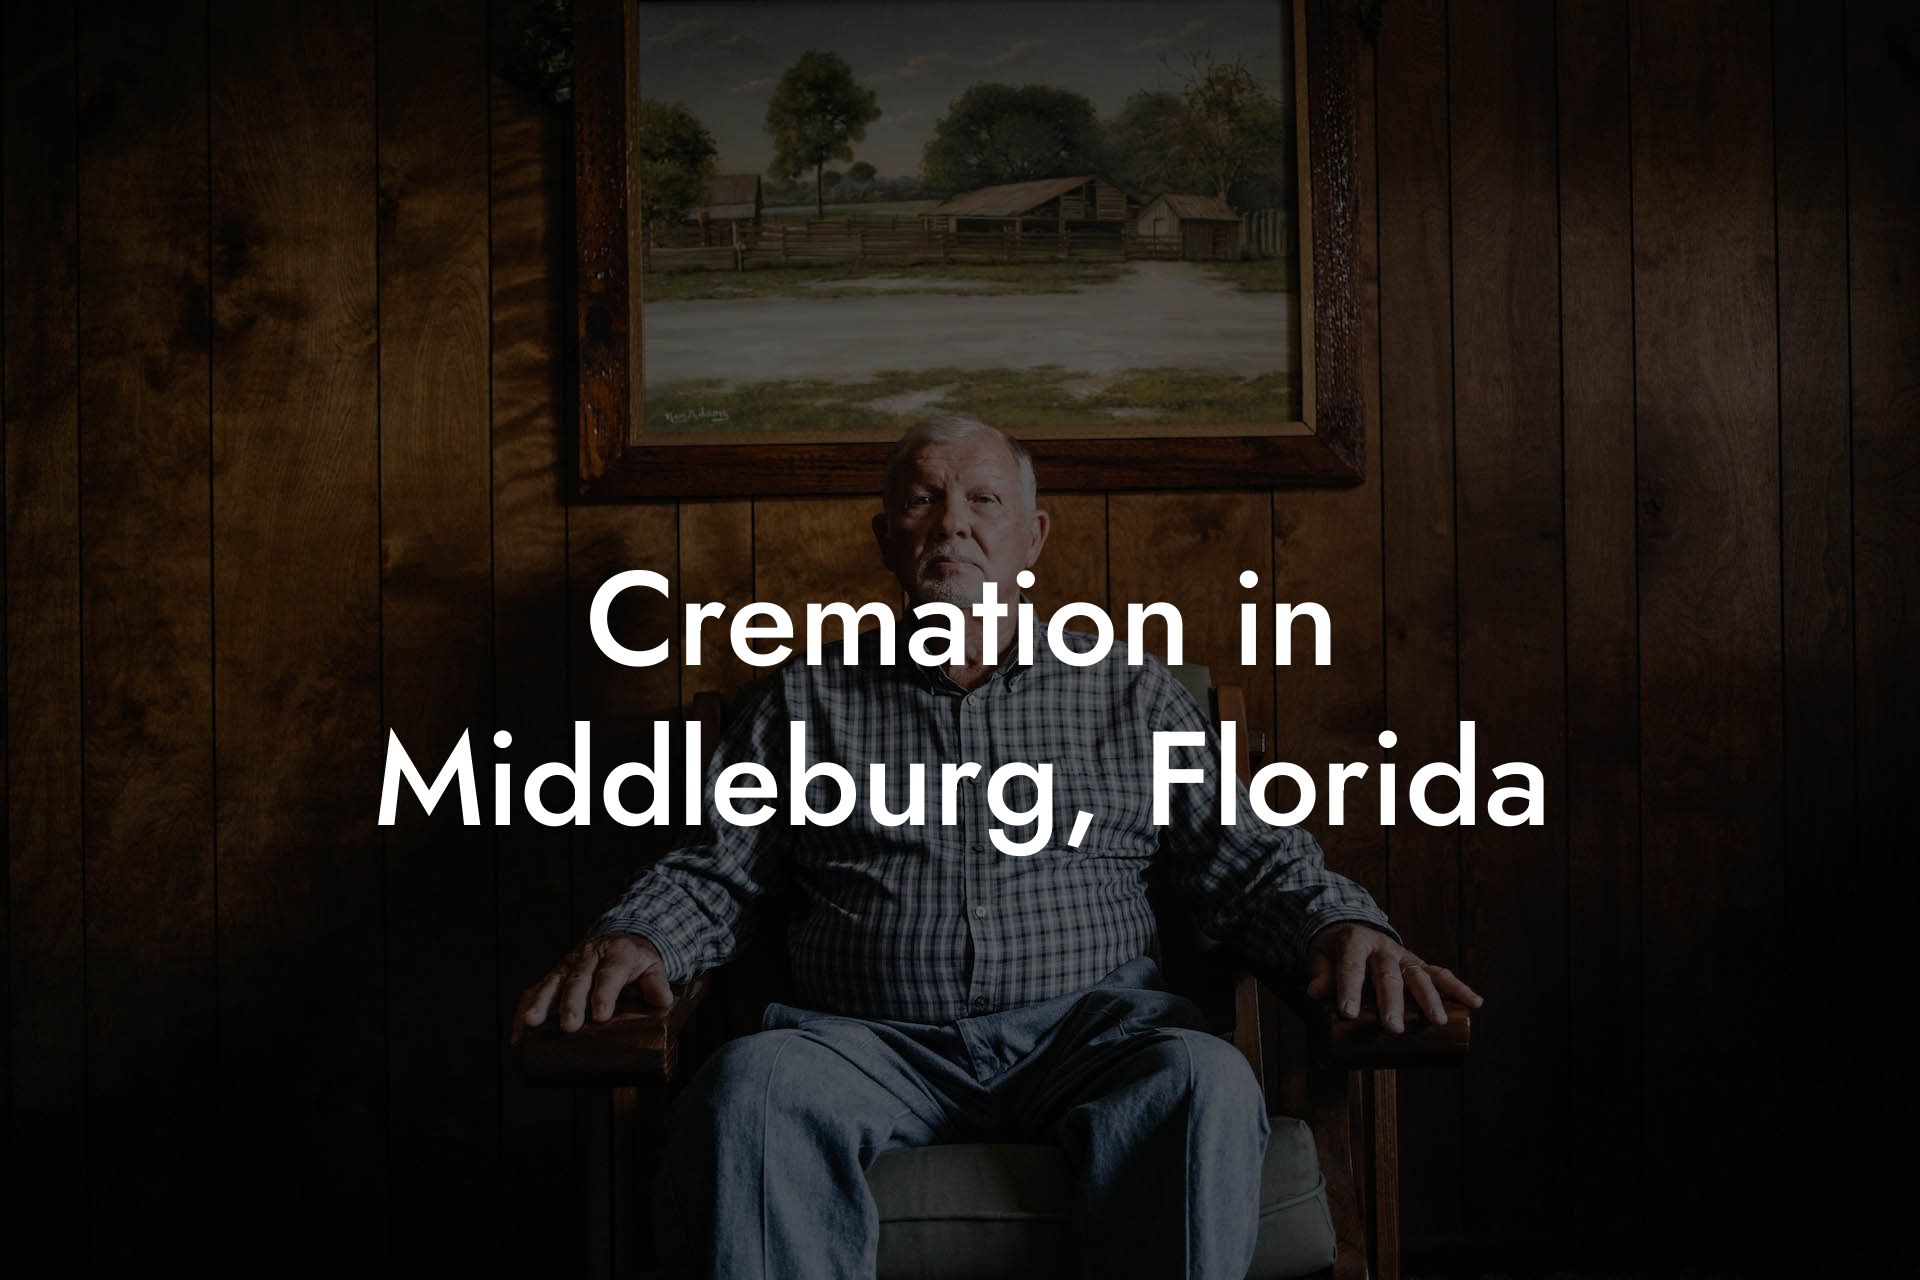 Cremation in Middleburg, Florida